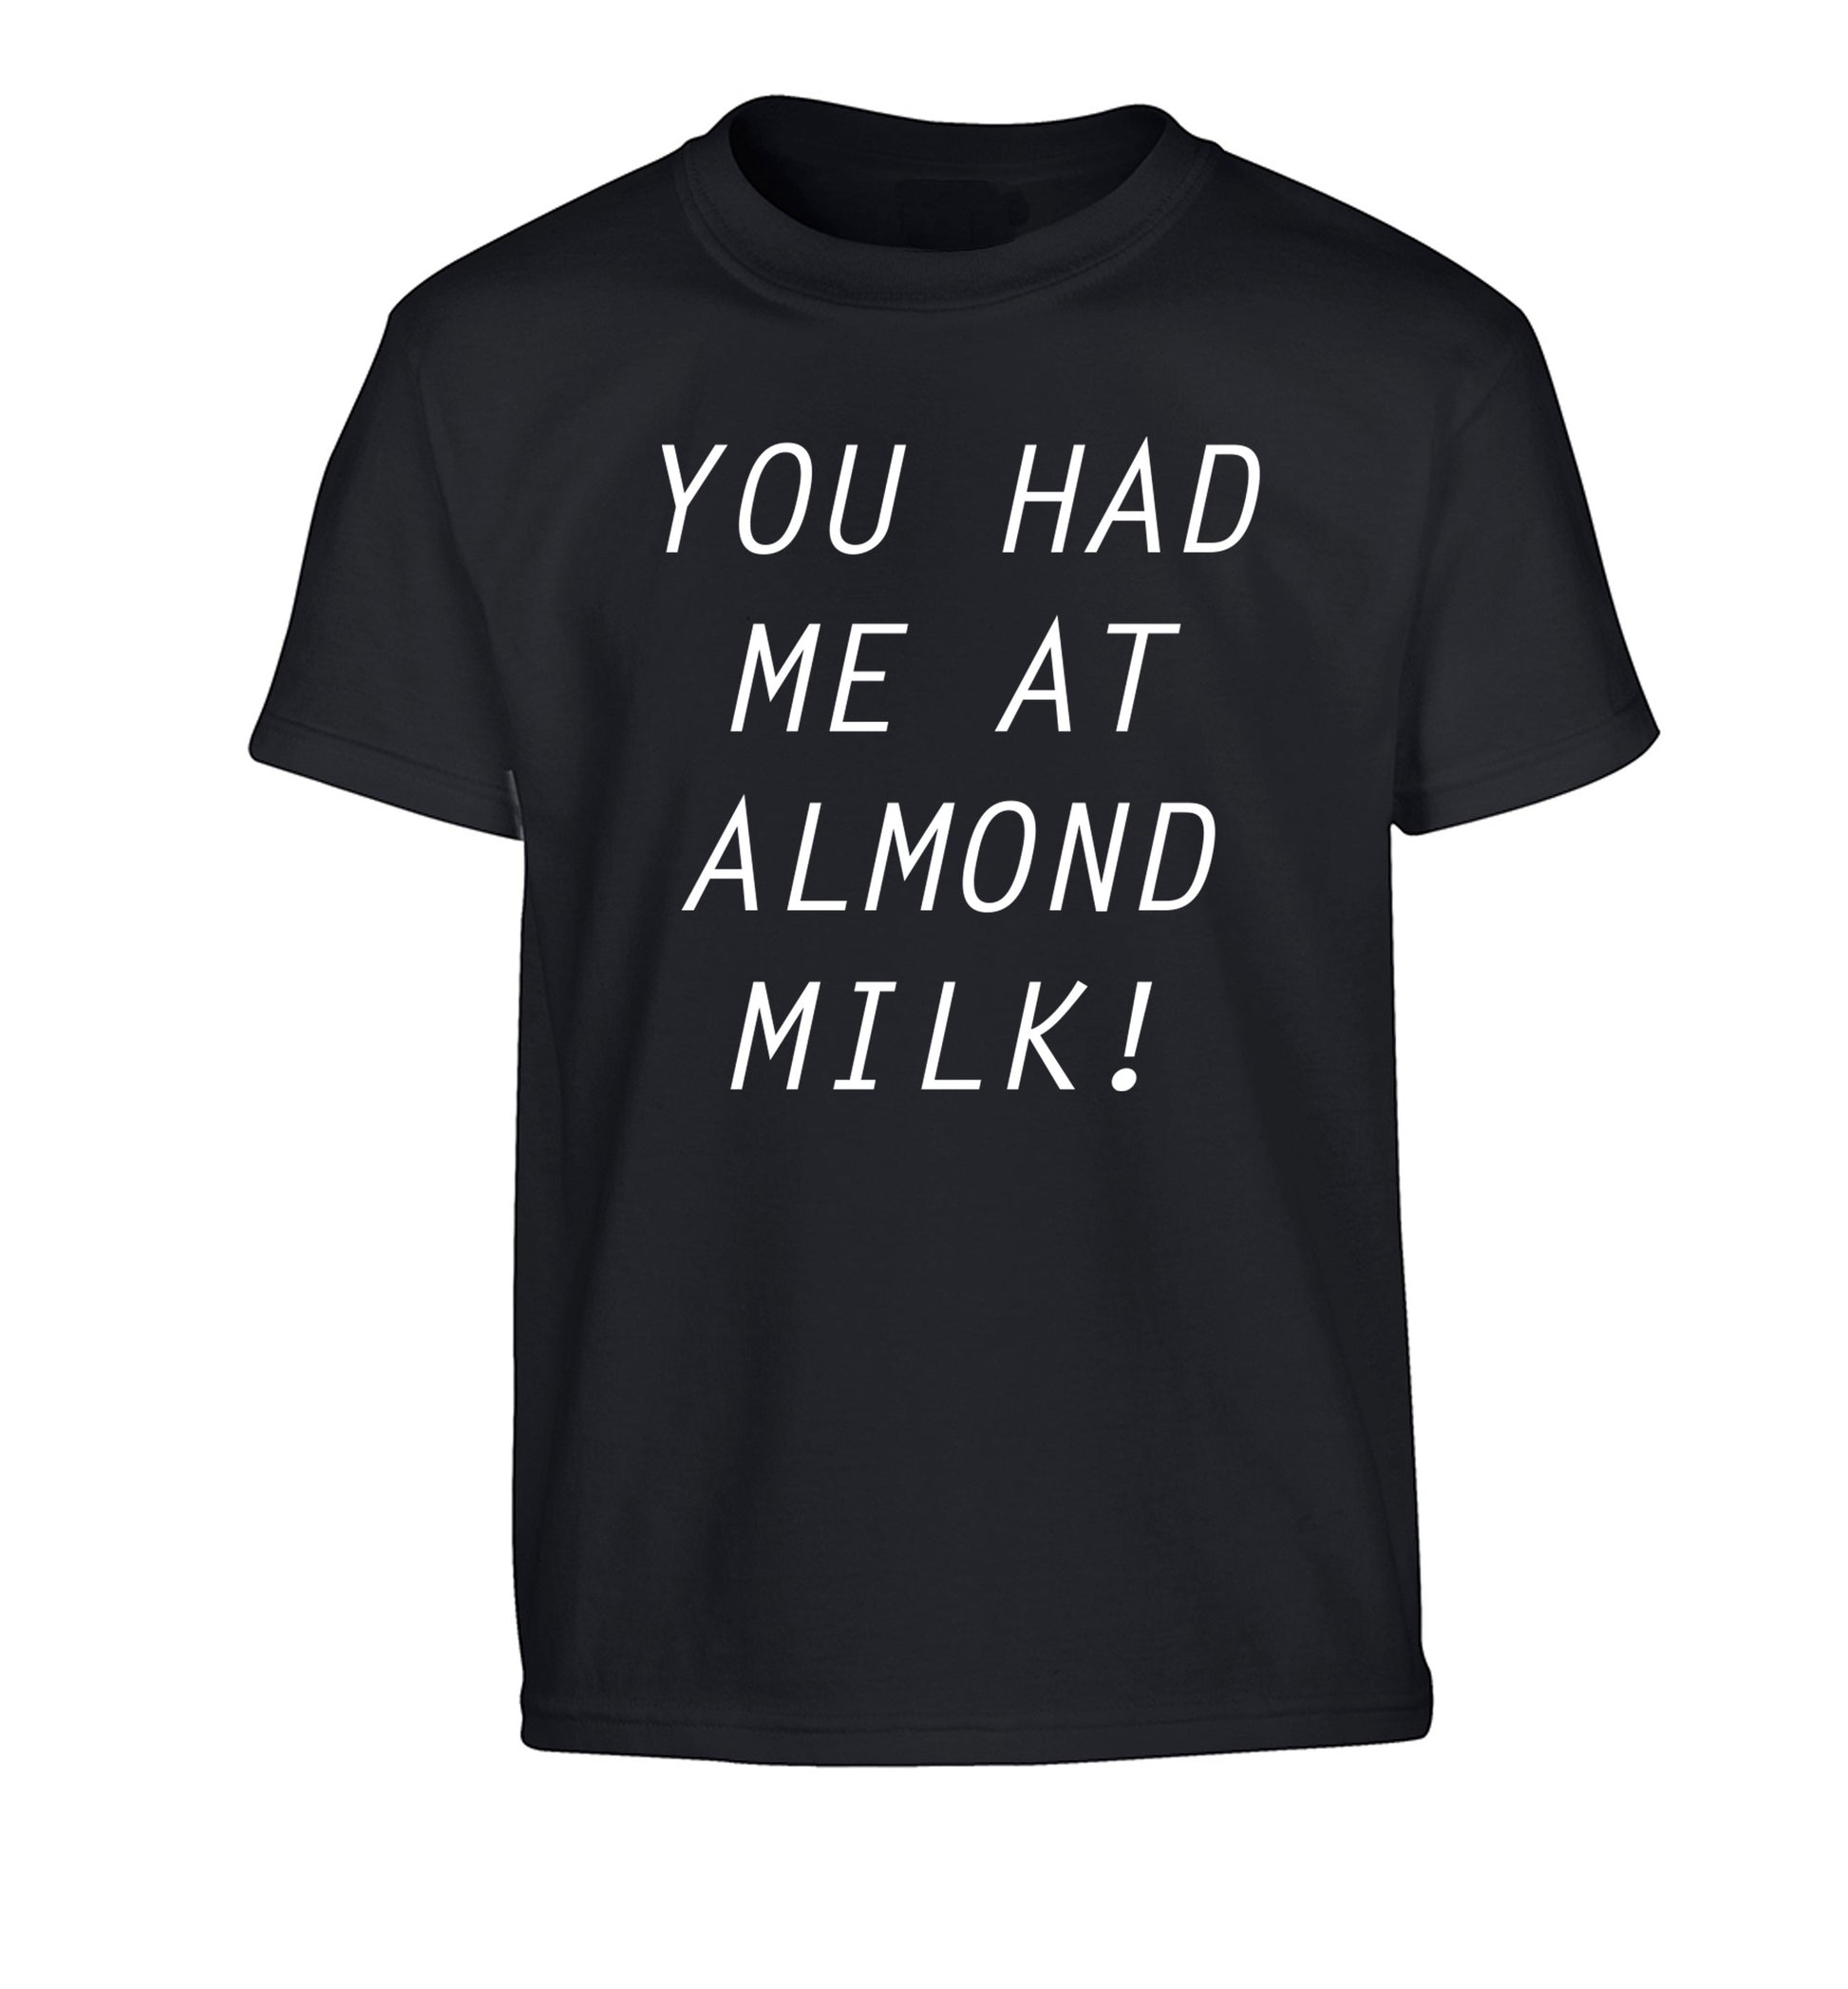 You had me at almond milk Children's black Tshirt 12-14 Years